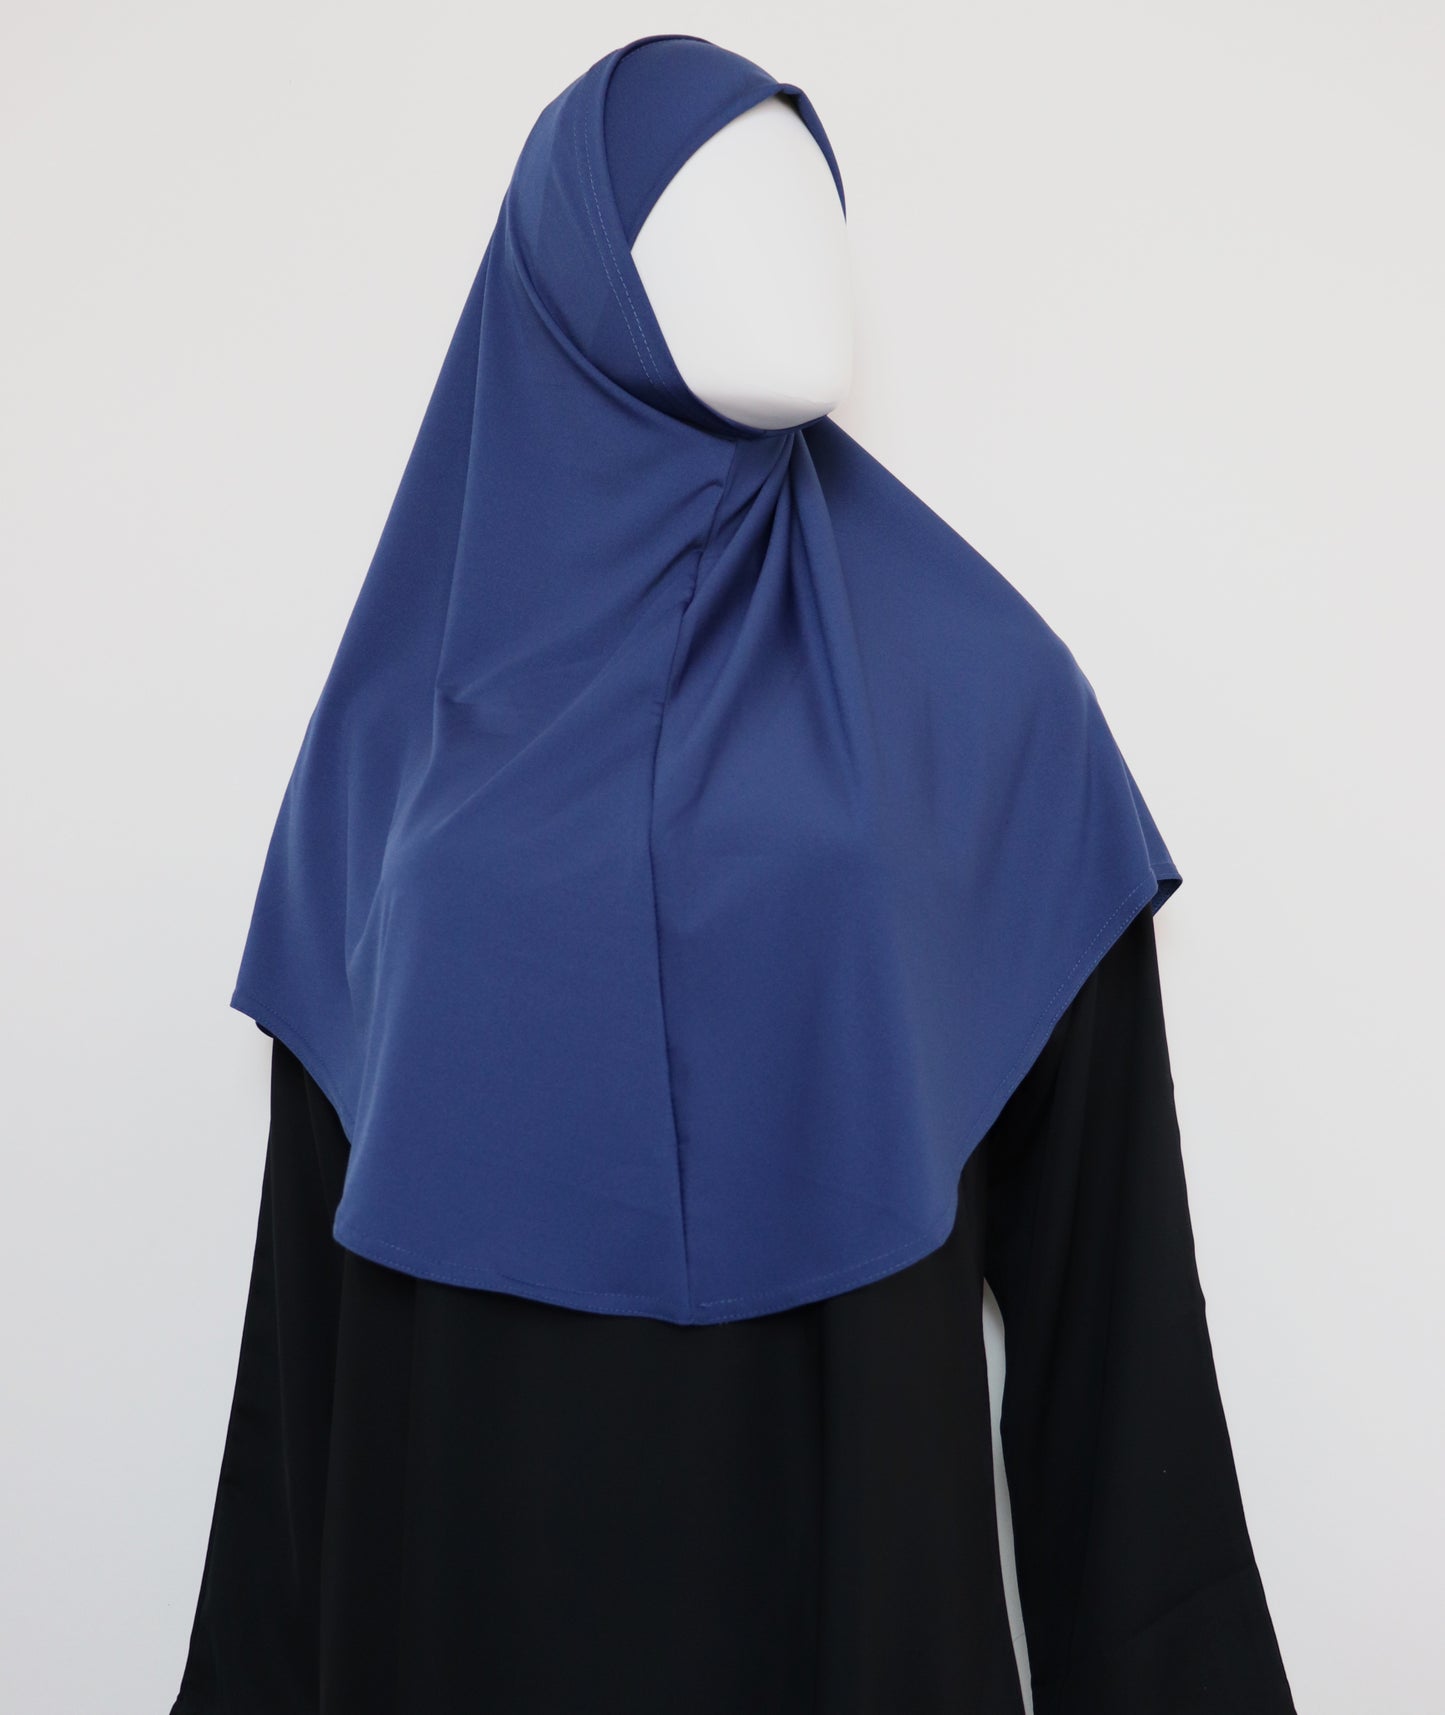 Two Piece Amira Slip On Instant Hijab